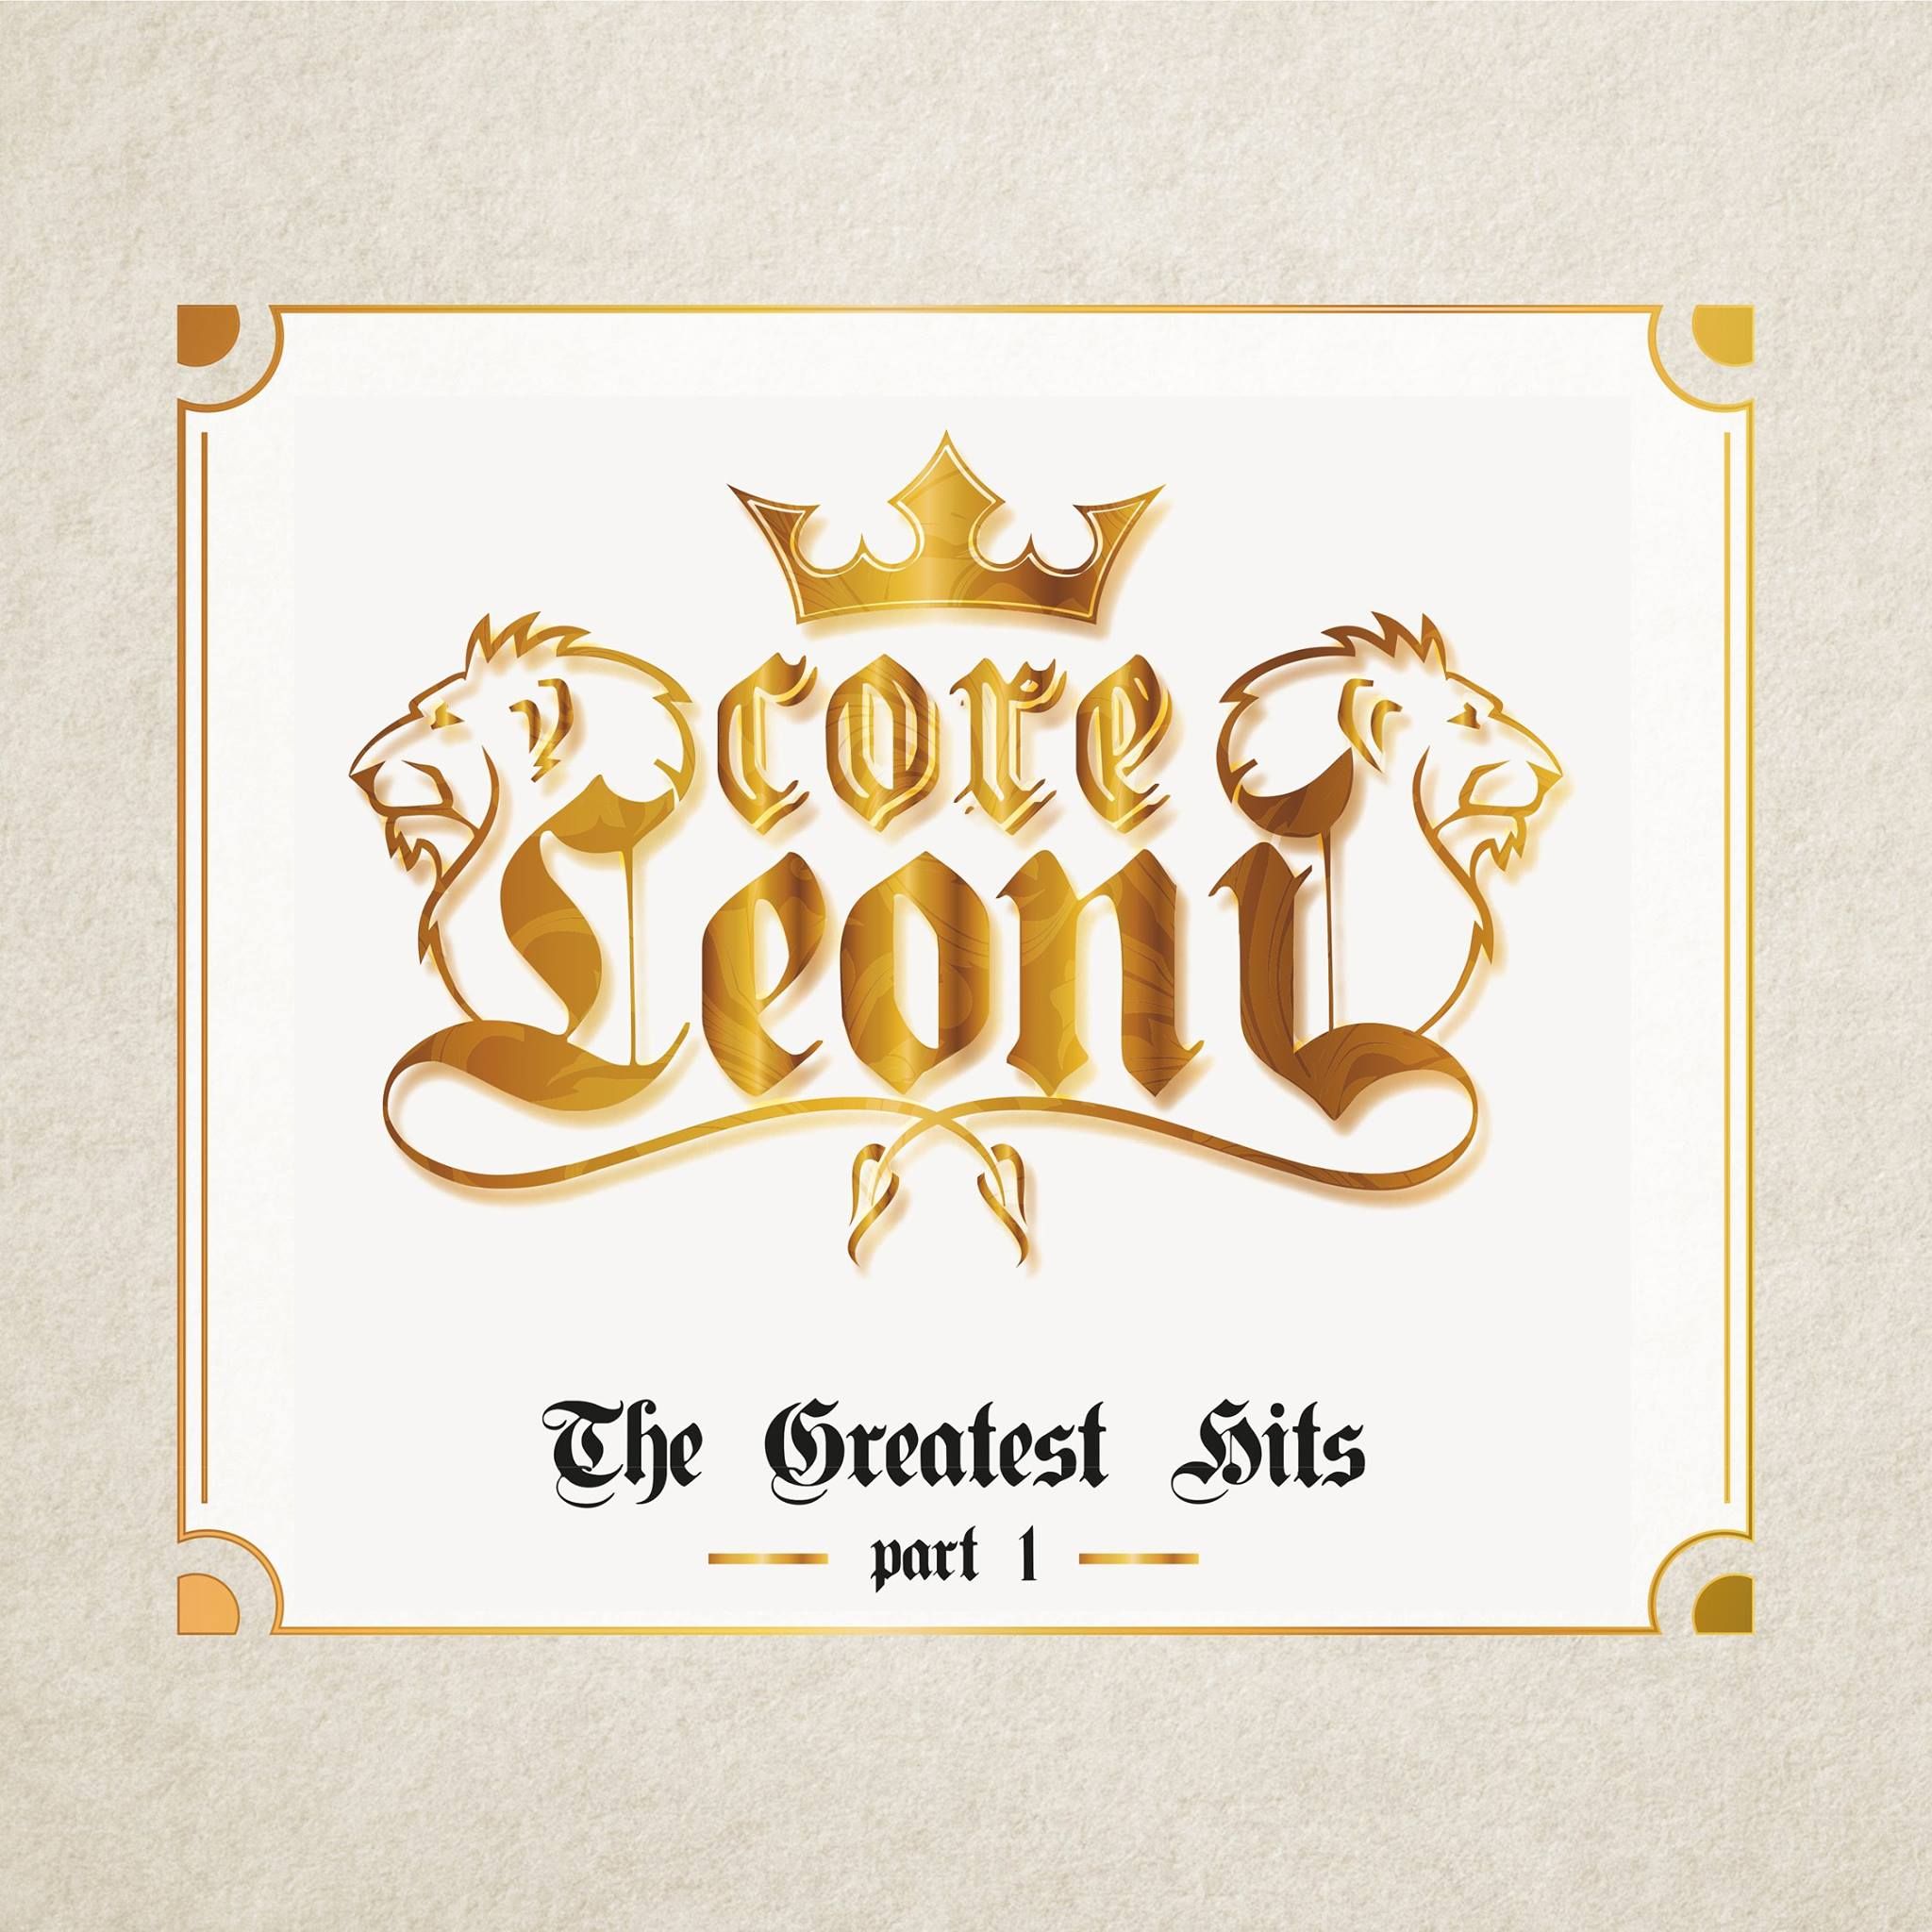 CoreLeoni: "The Greatest Hits, Part 1" erscheint im Februar